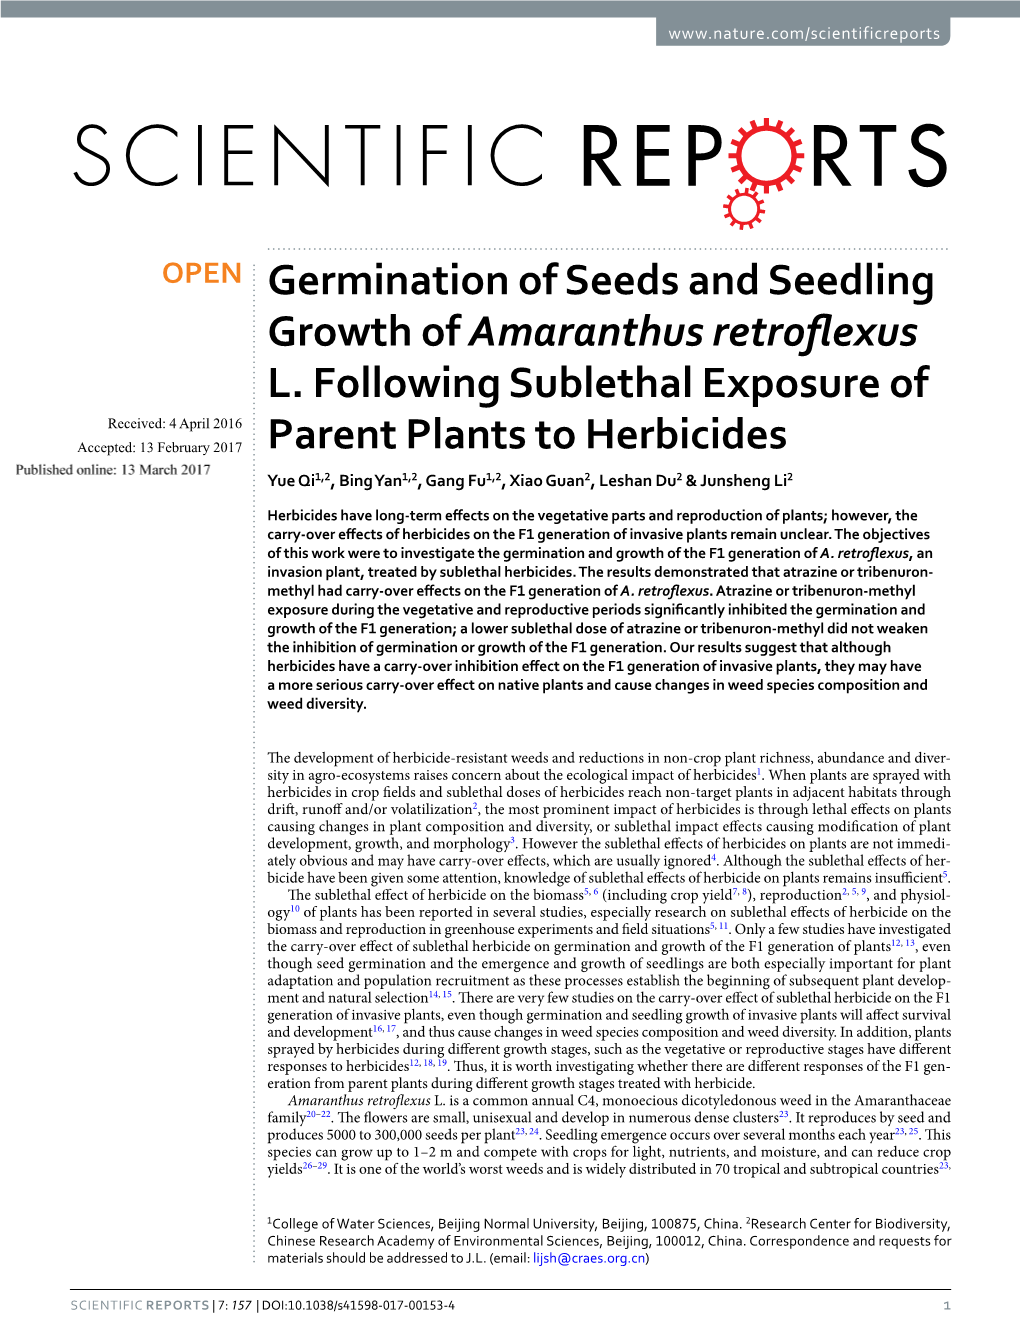 Germination of Seeds and Seedling Growth of Amaranthus Retroflexus L